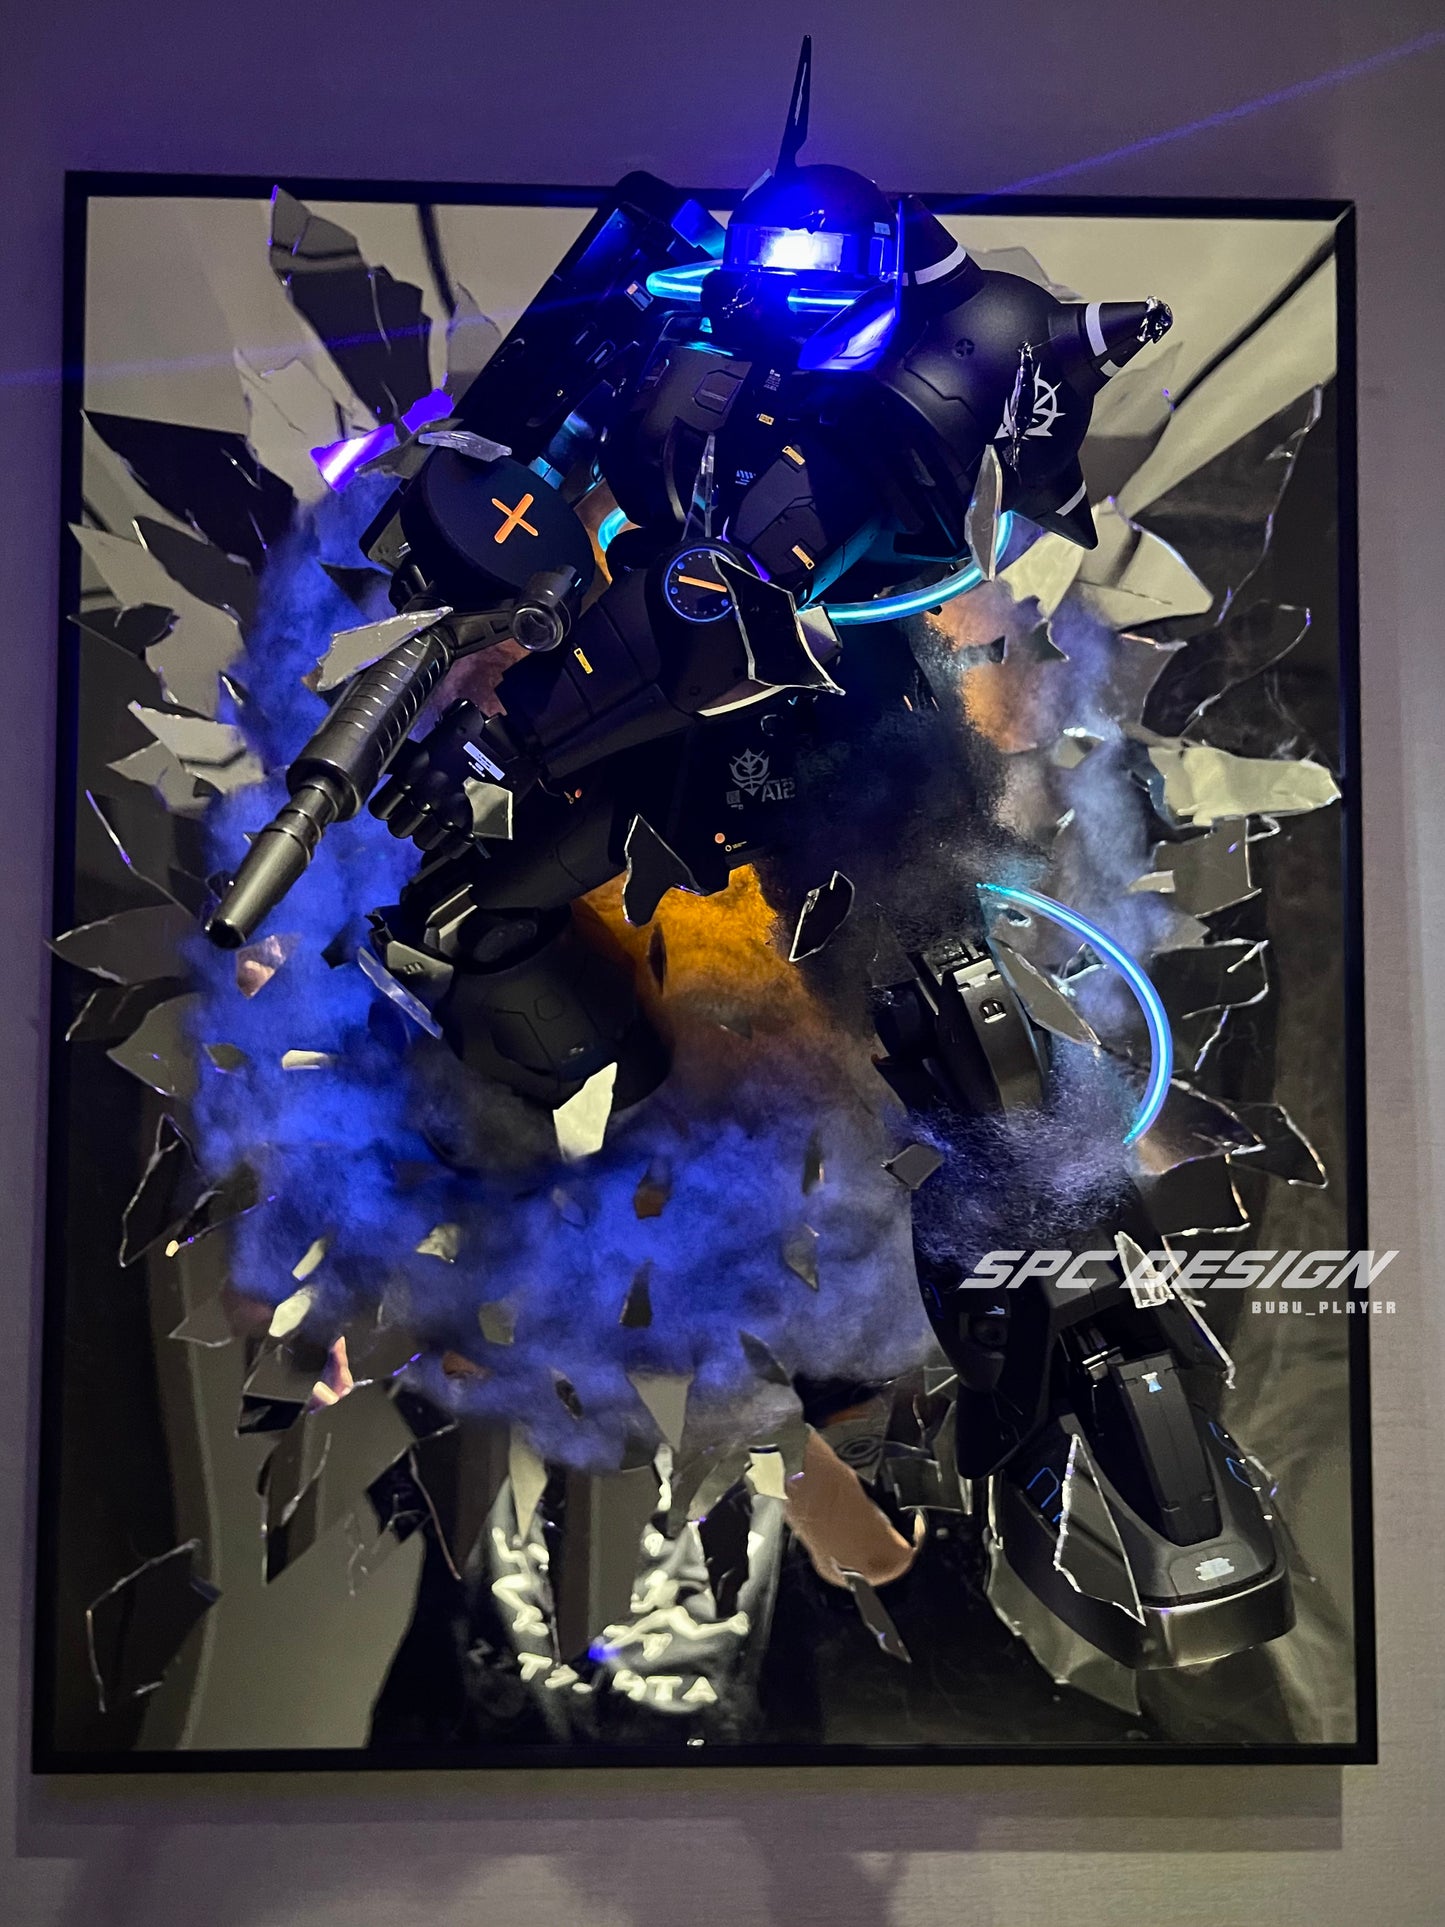 Zakull Gundam - Man's favorite Model with 4 kinds 1:48 mega